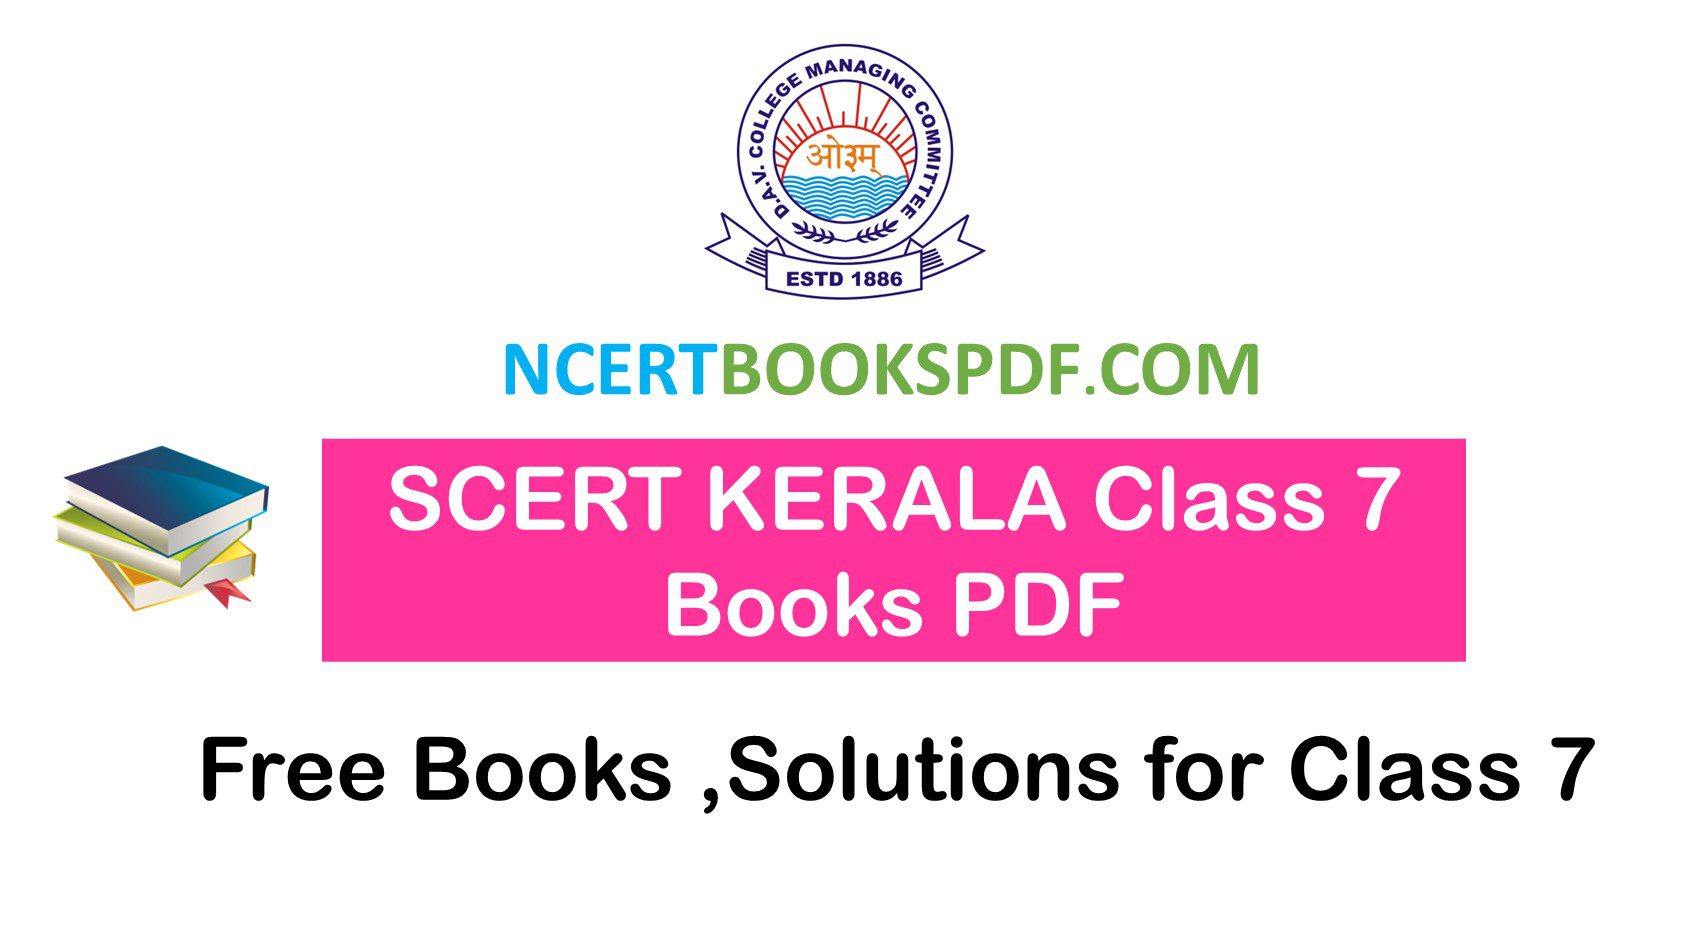 SCERT KERALA CLASS 7 BOOKS PDF